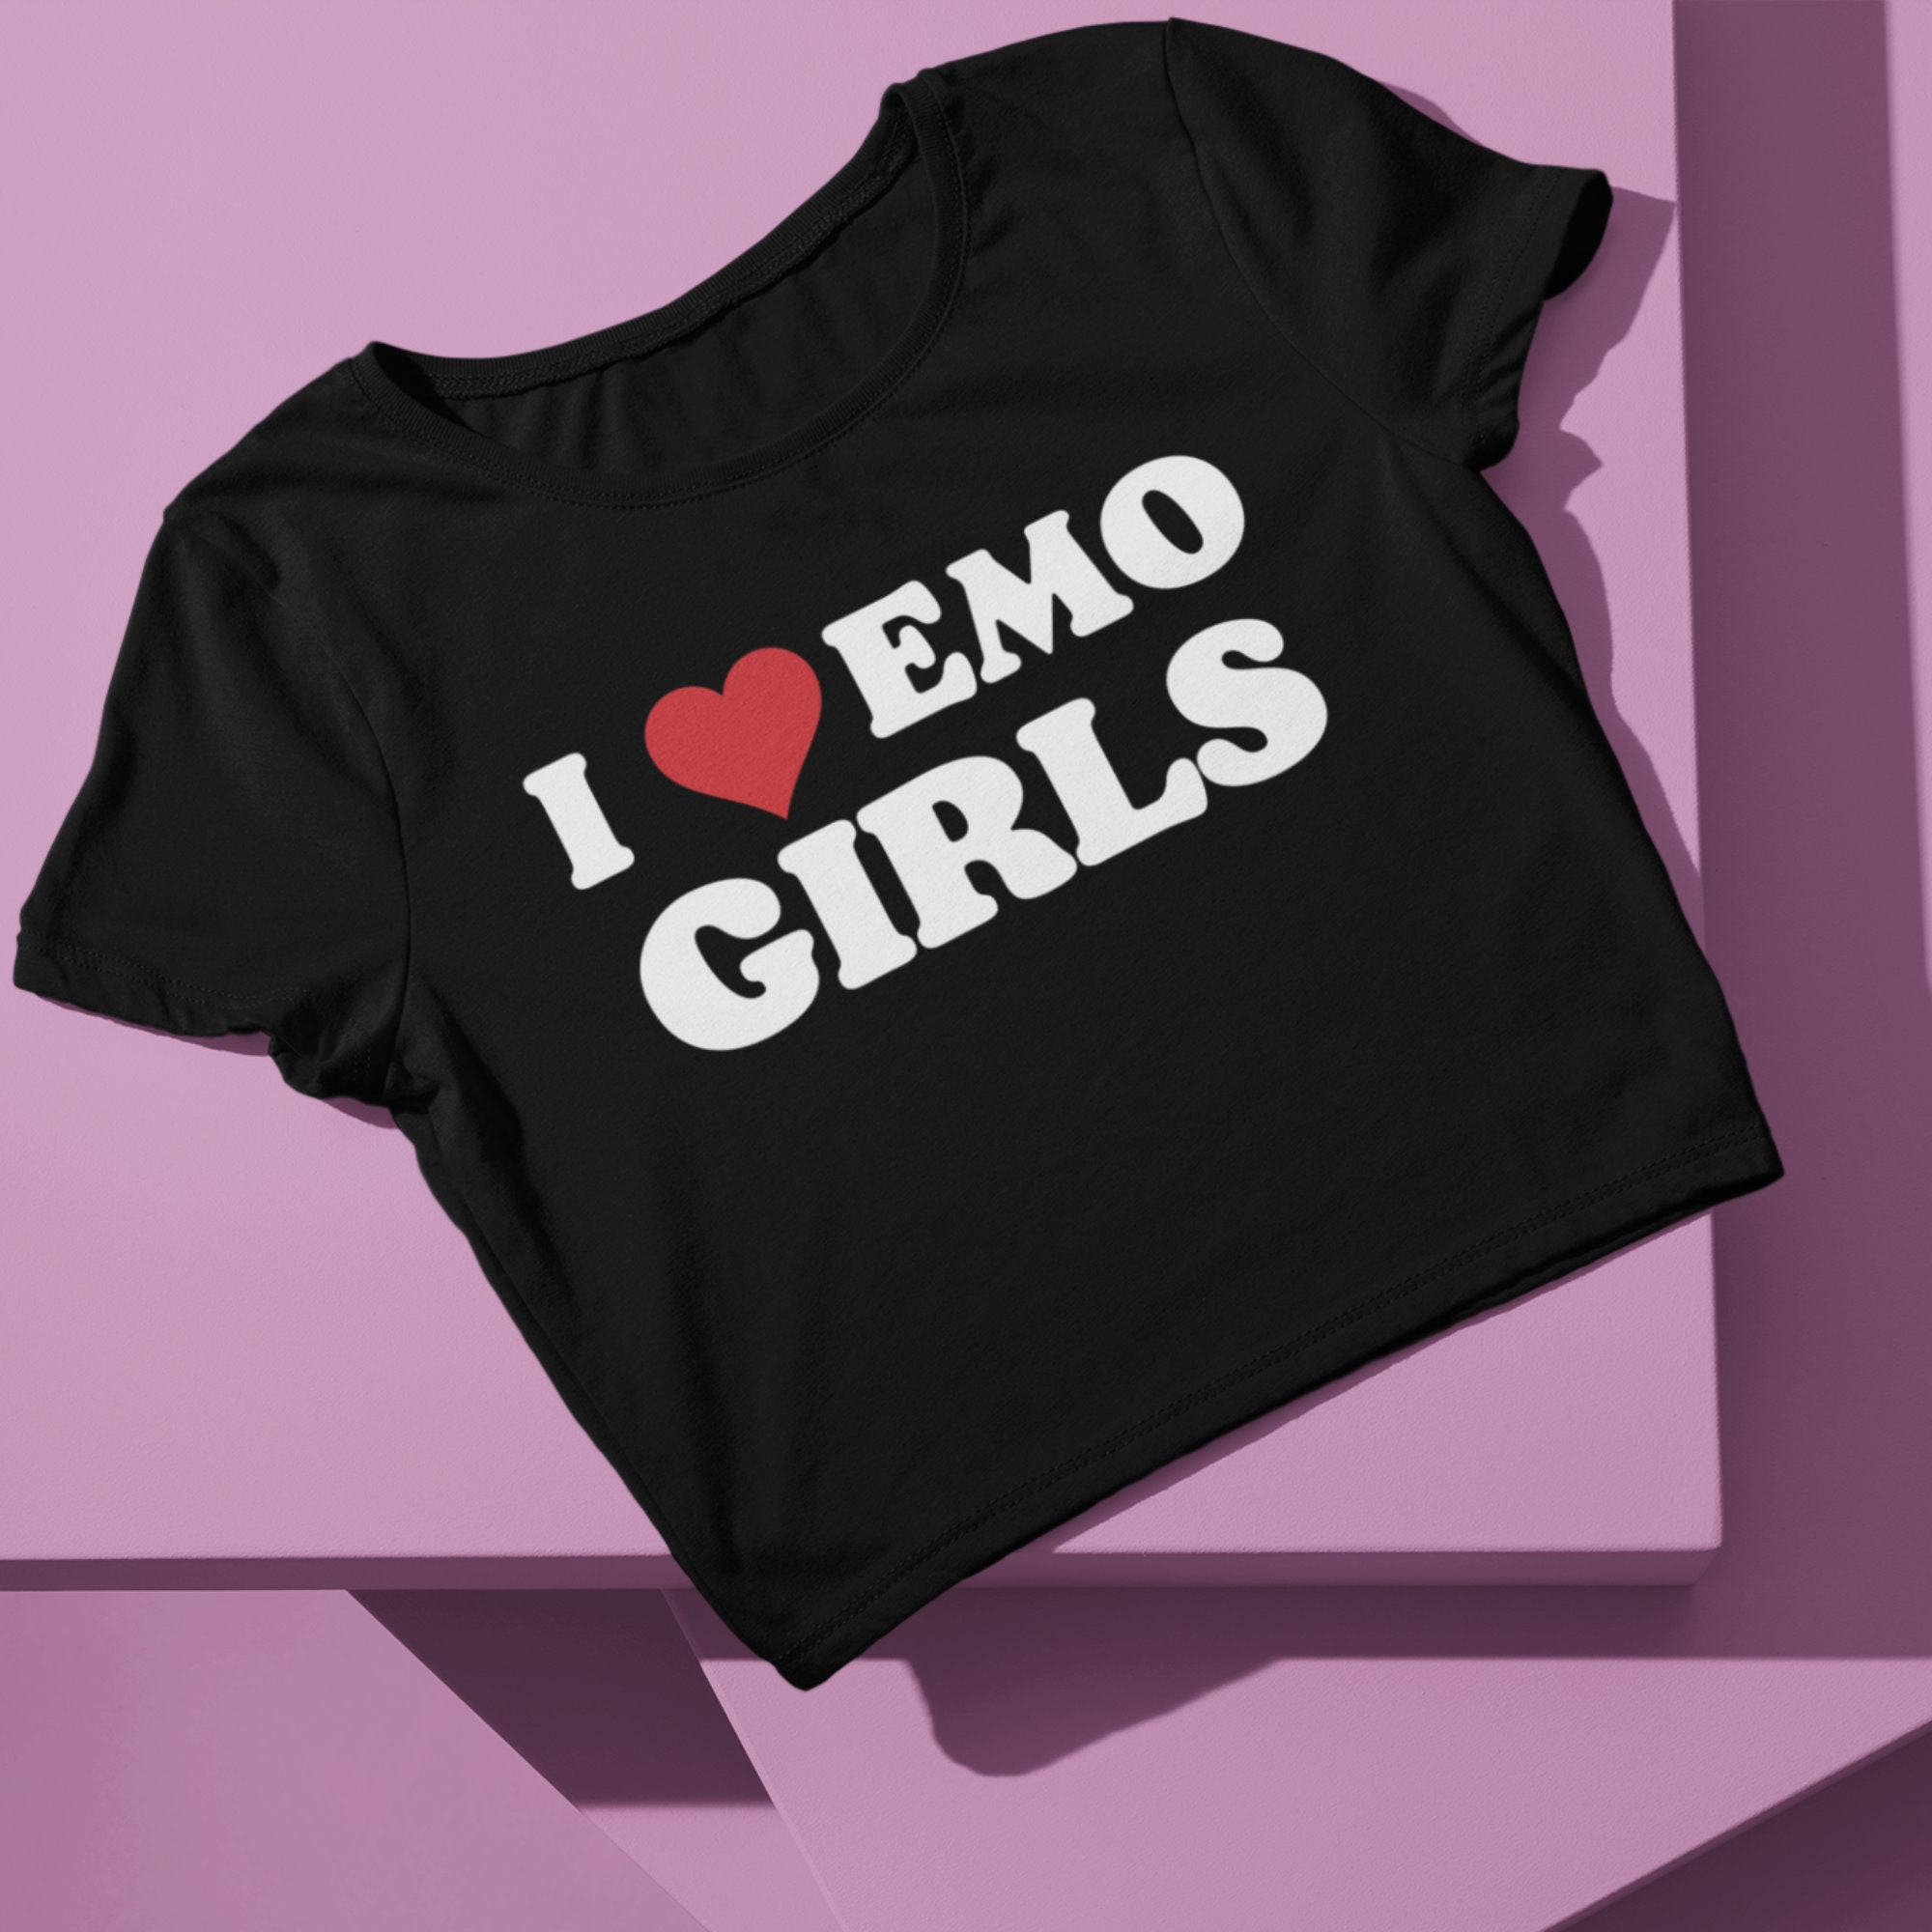  I Love Emo Girls - I Heart Emo Girls T-Shirt : Clothing, Shoes  & Jewelry